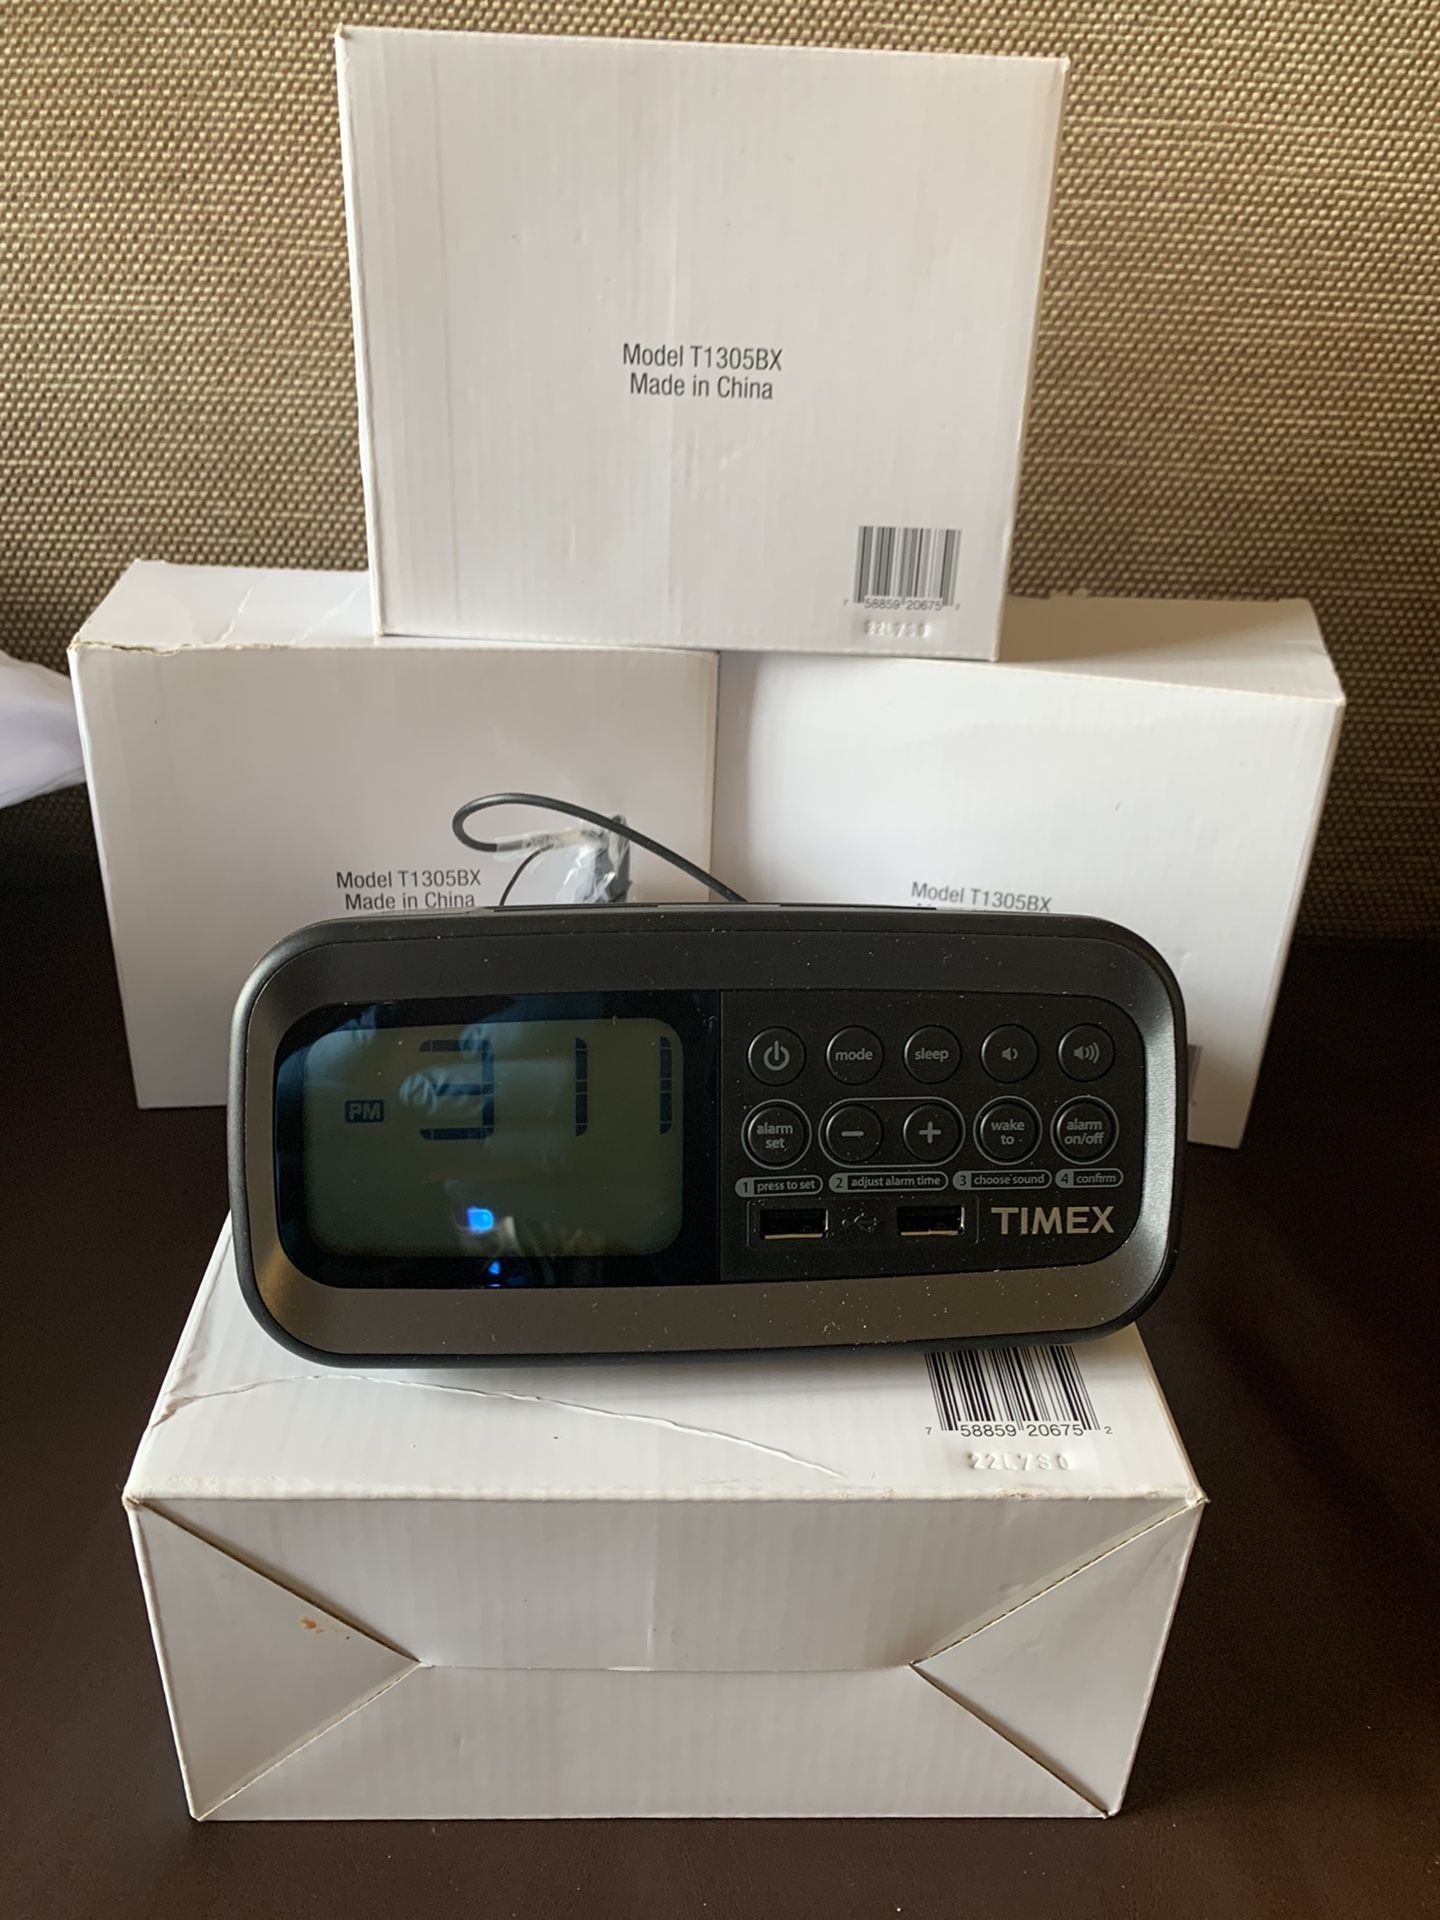 4 brand new Timex dual alarm clock radios with usb charging ports